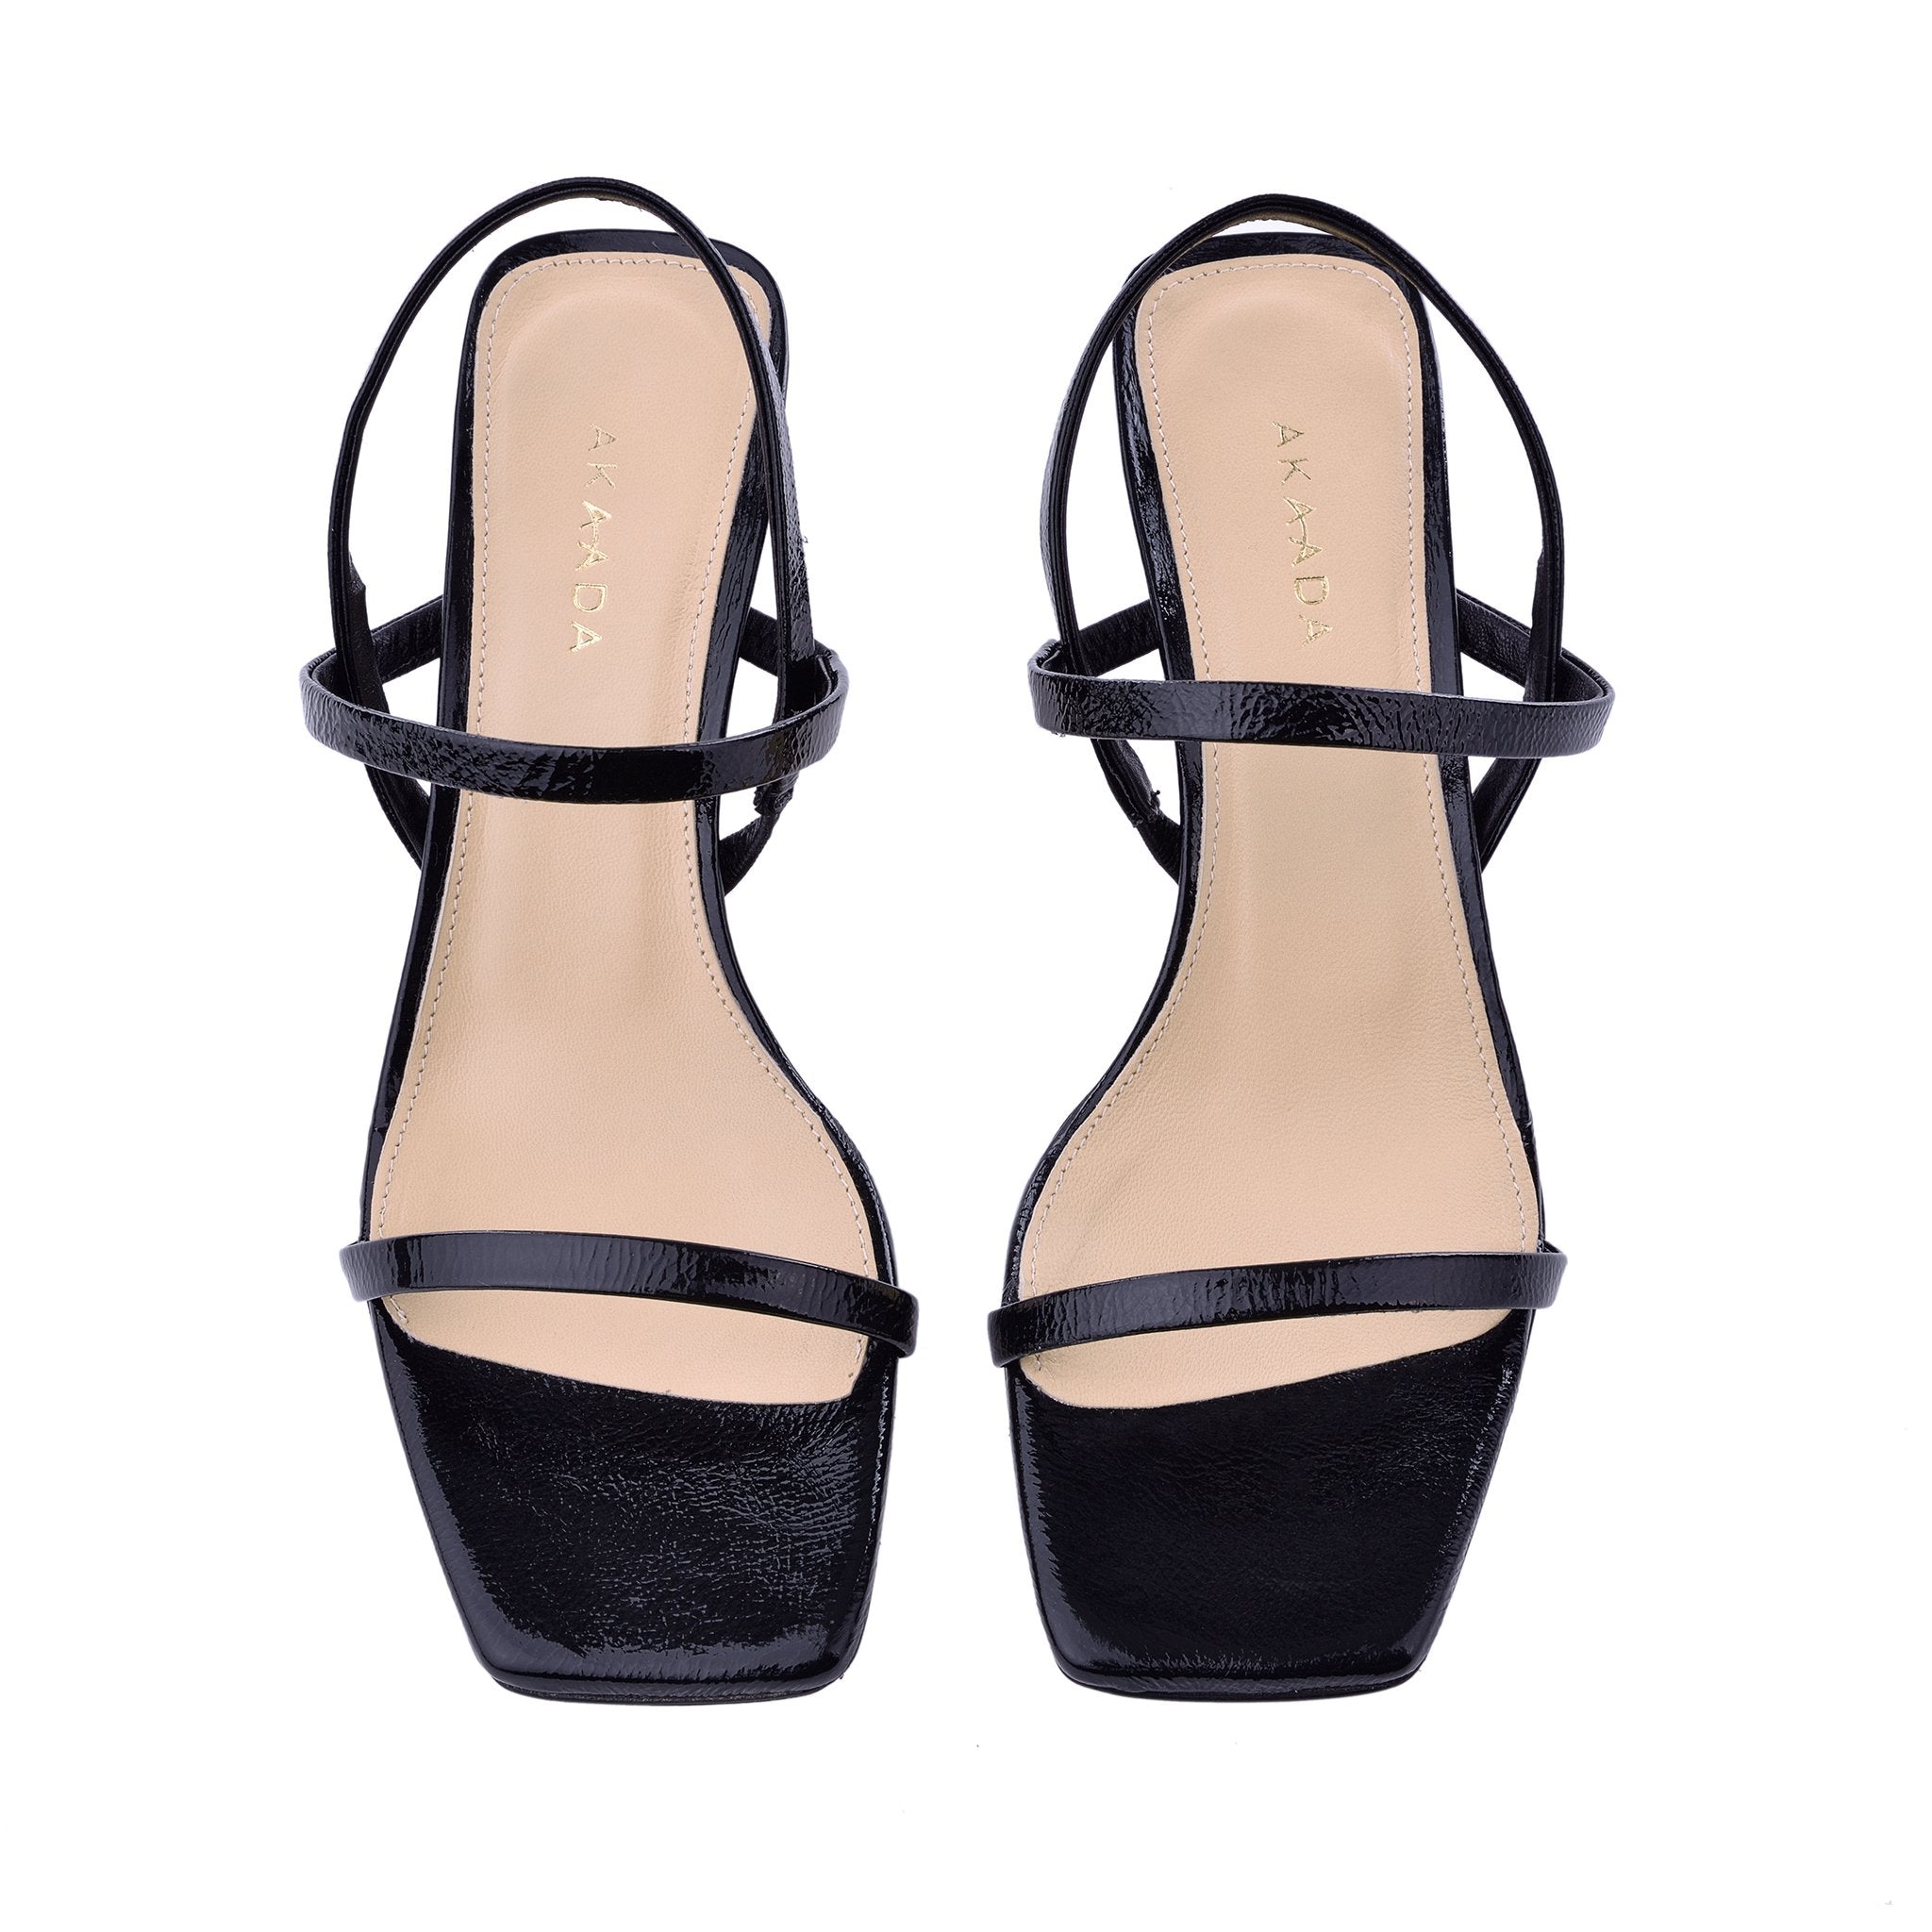 Miya Black Naplak Sandals 1408-01 - 6